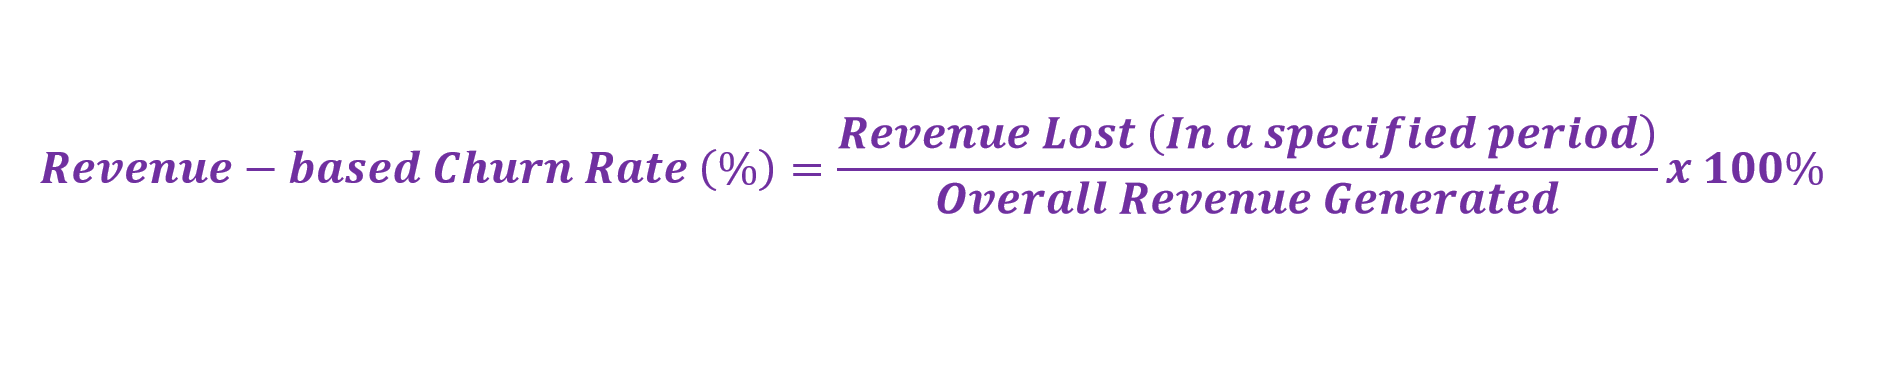 revenue-based churn rate calculation formula